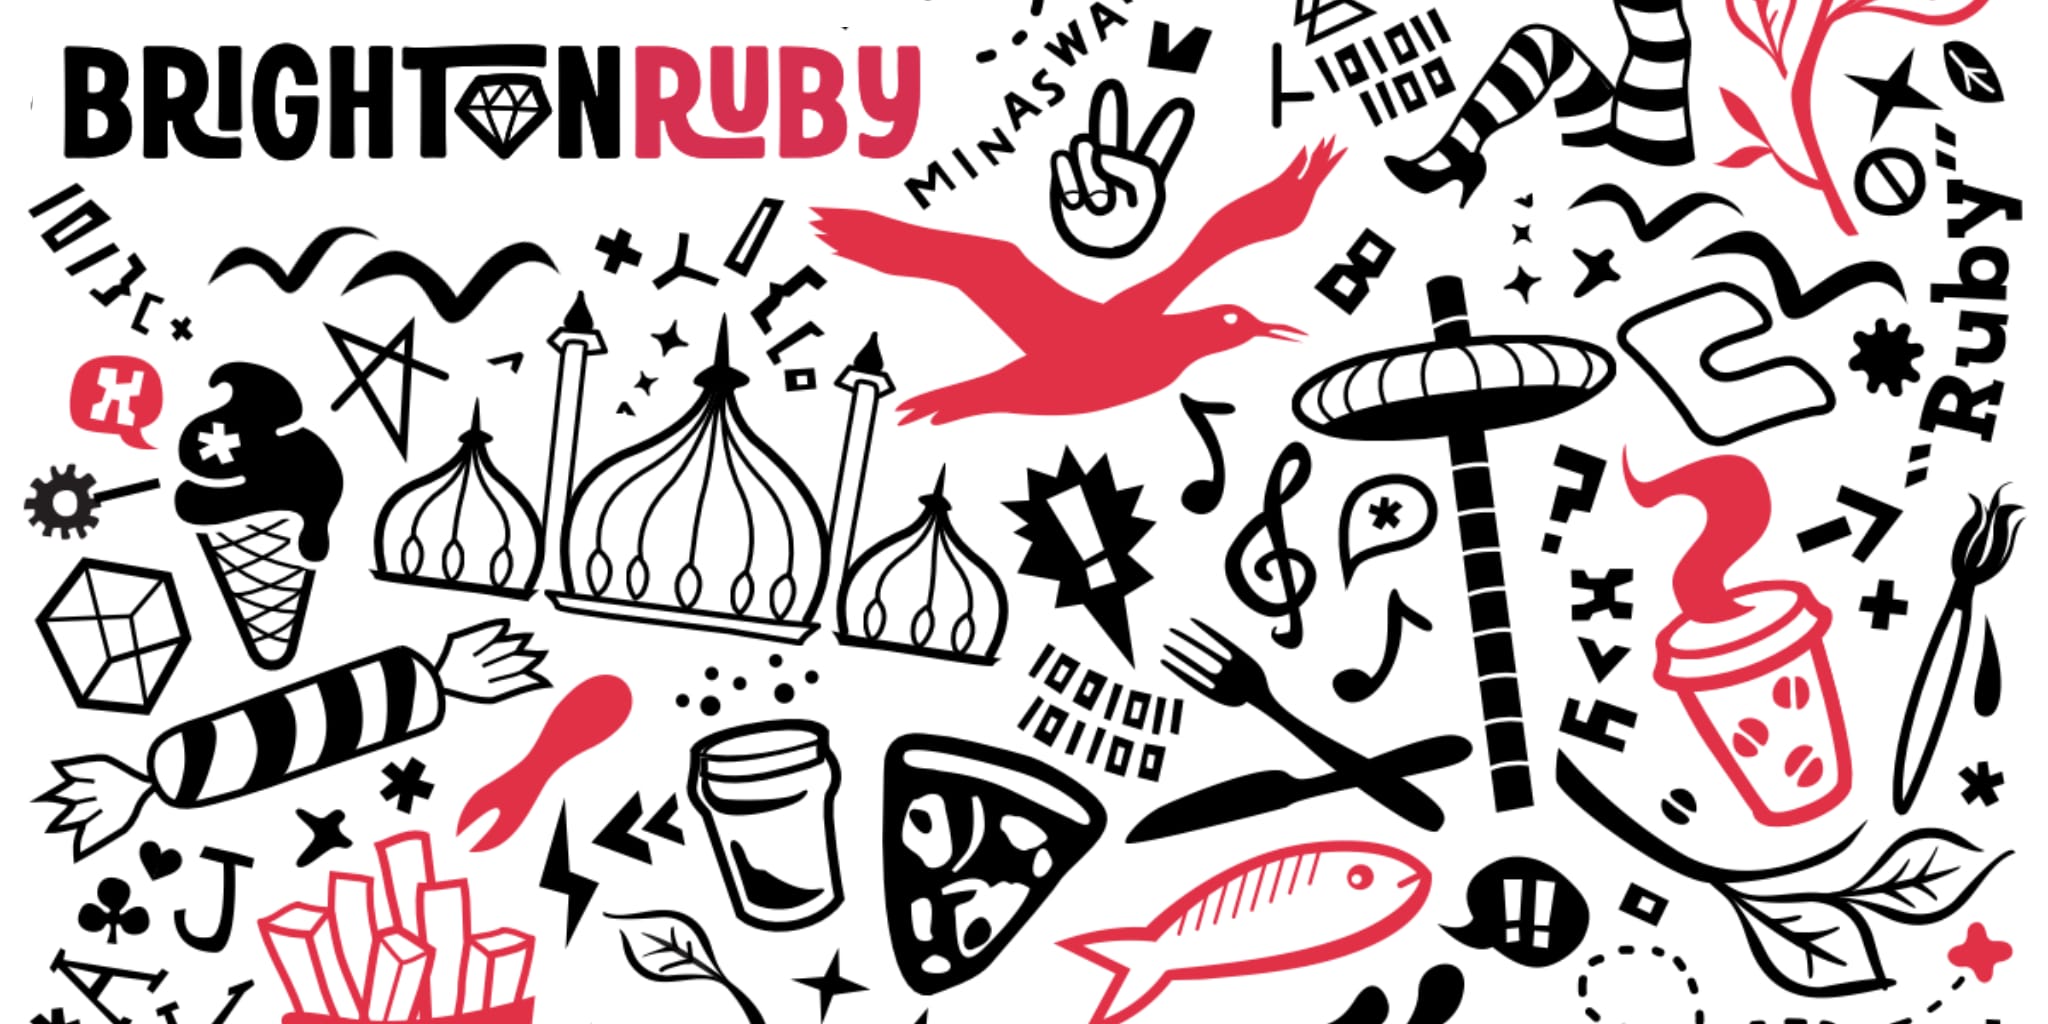 Brighton Ruby Conference